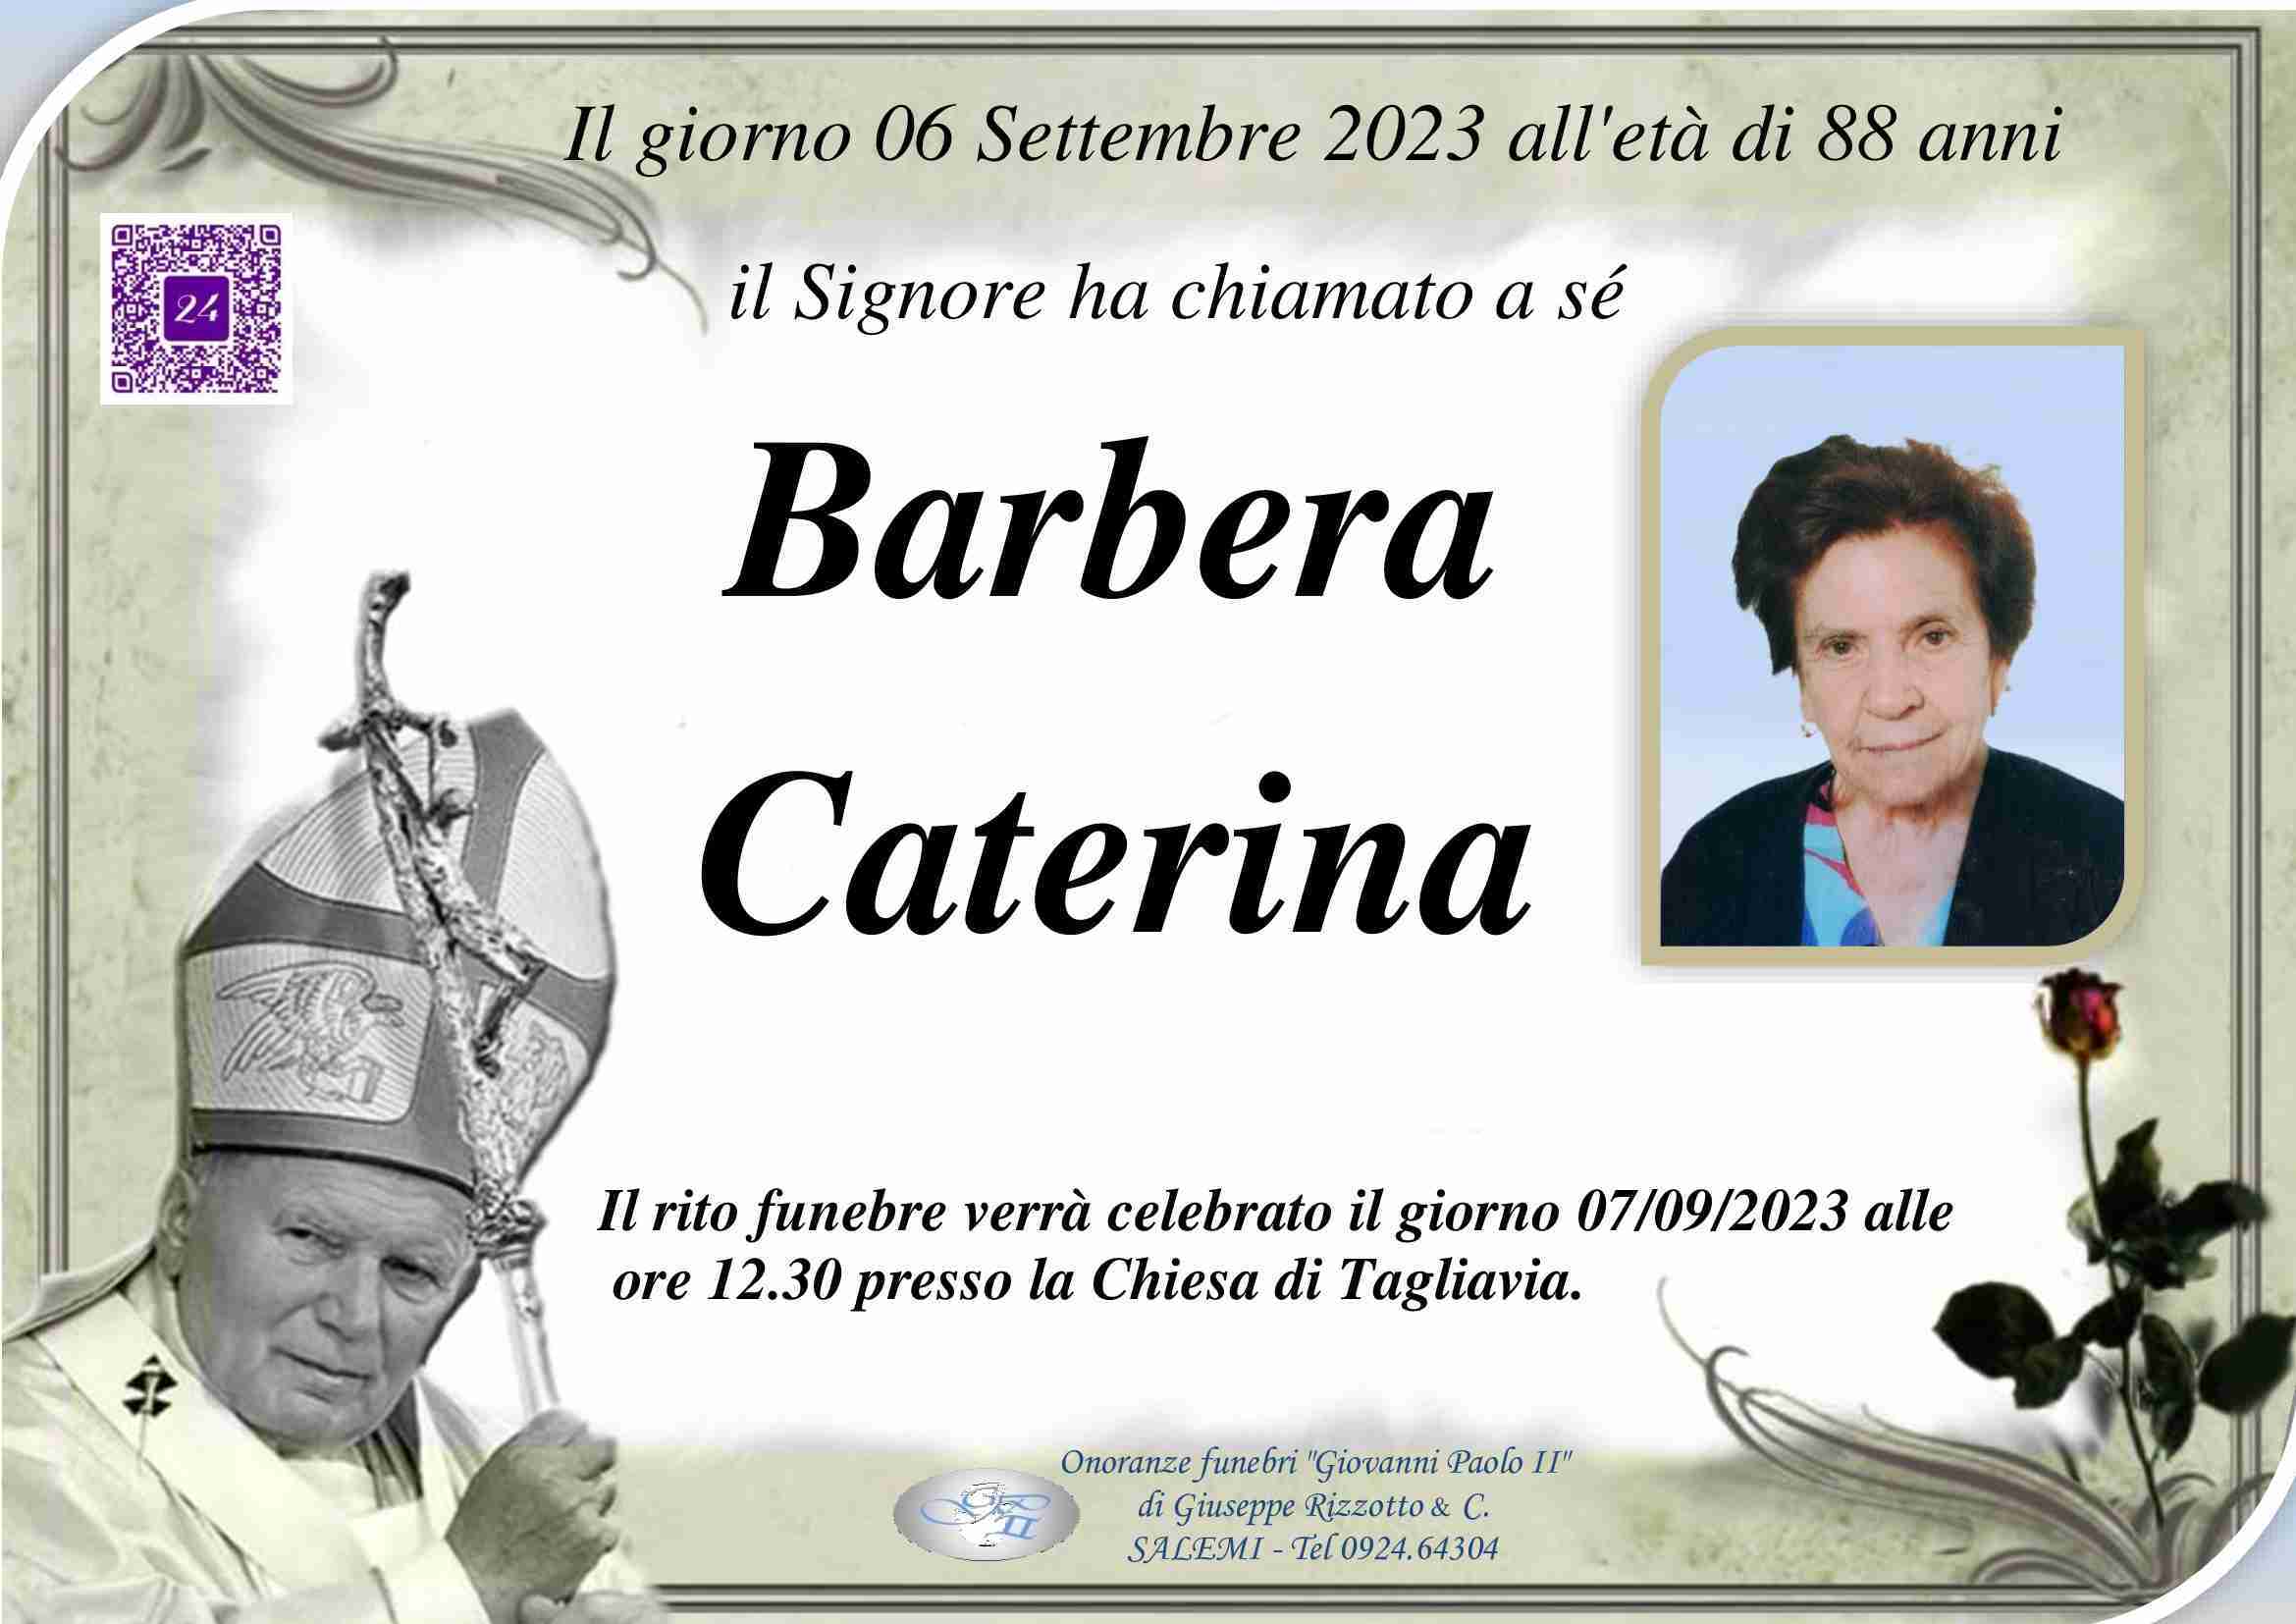 Caterina Barbera